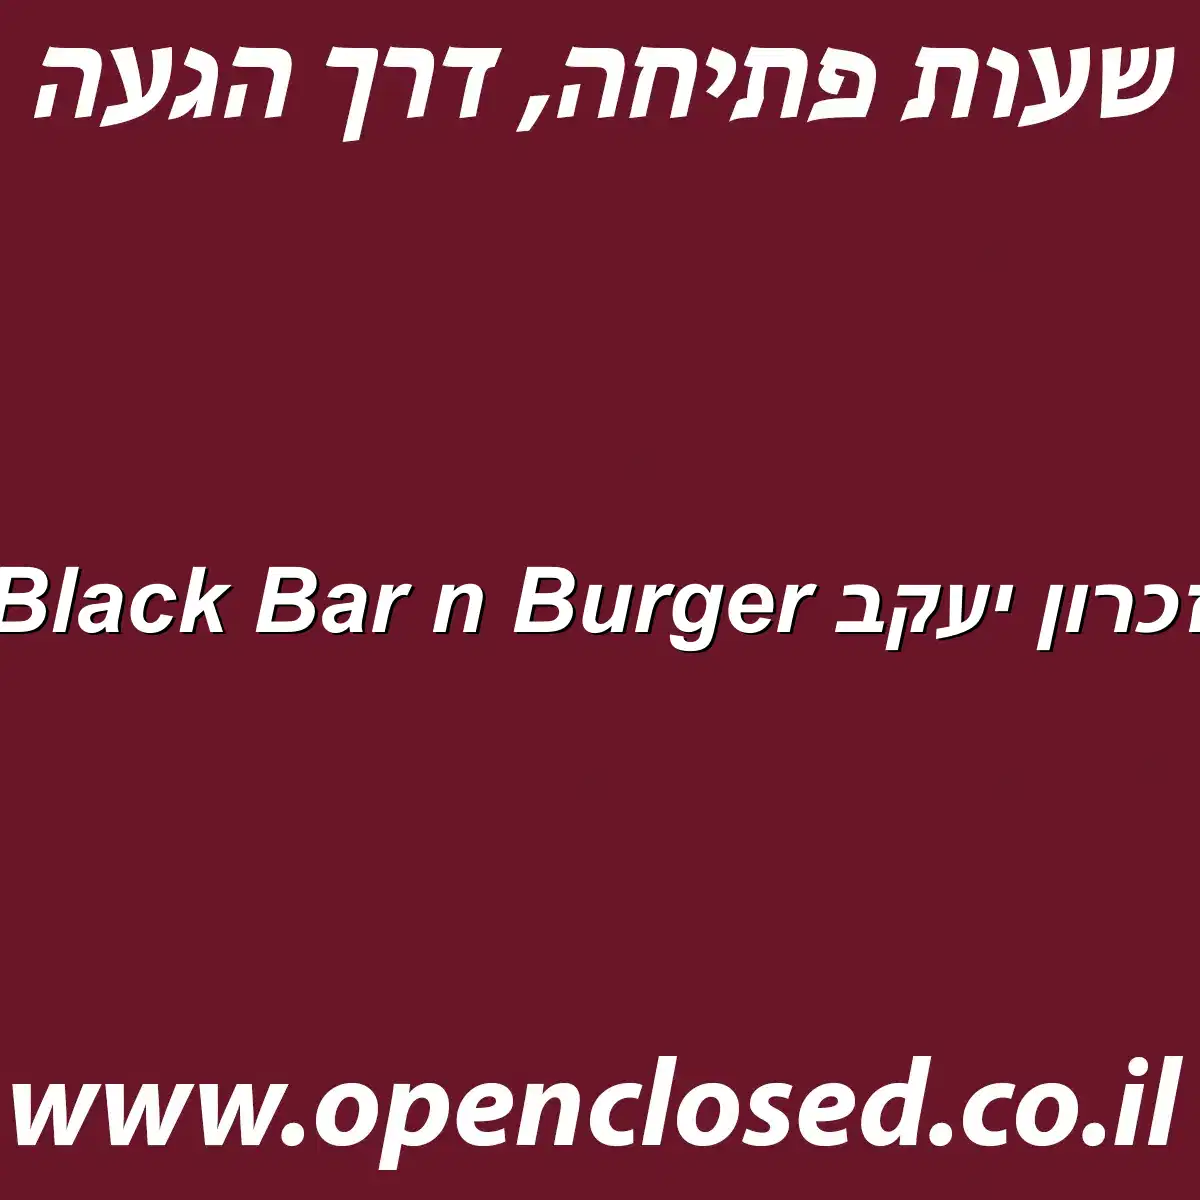 Black Bar n Burger זכרון יעקב